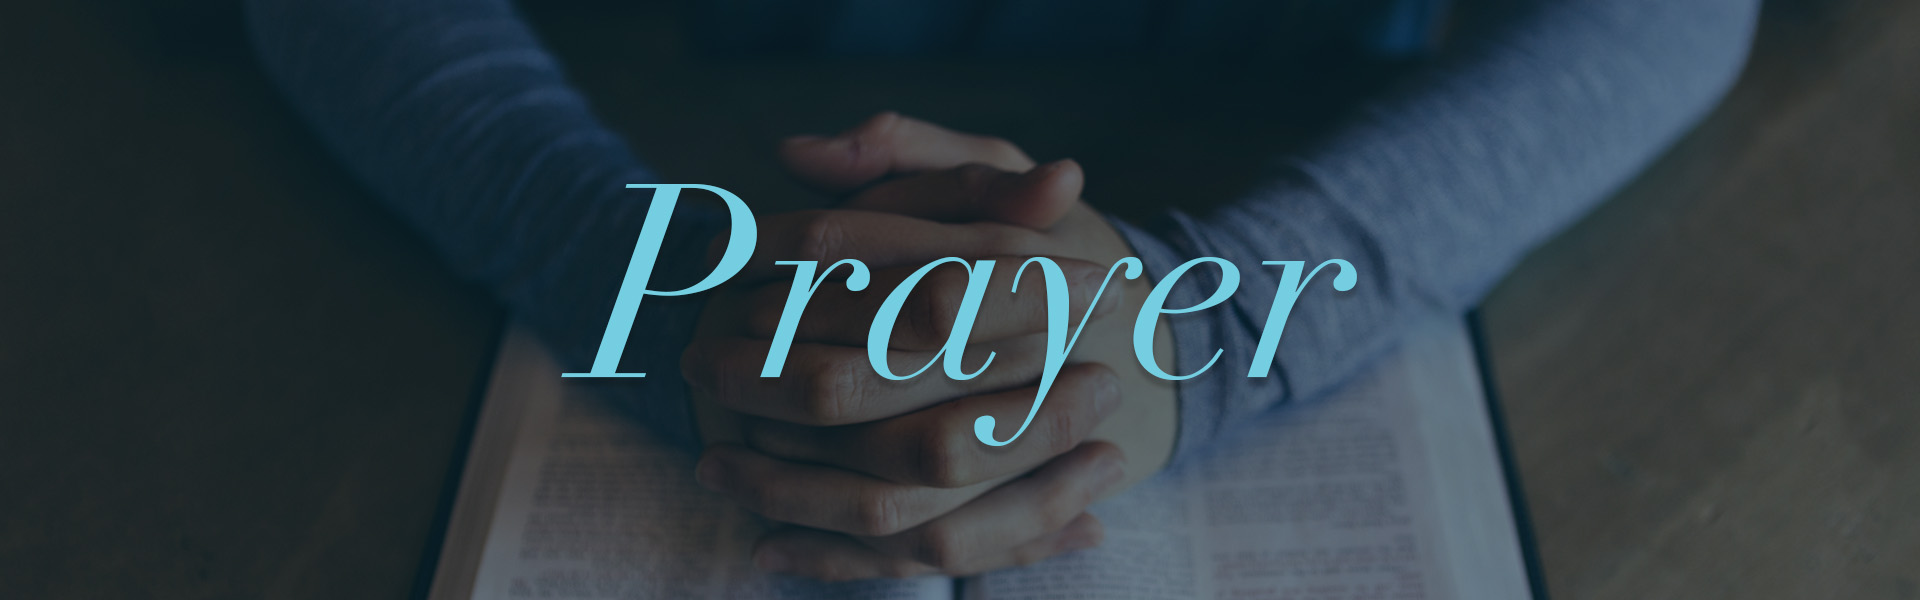 image of prayer